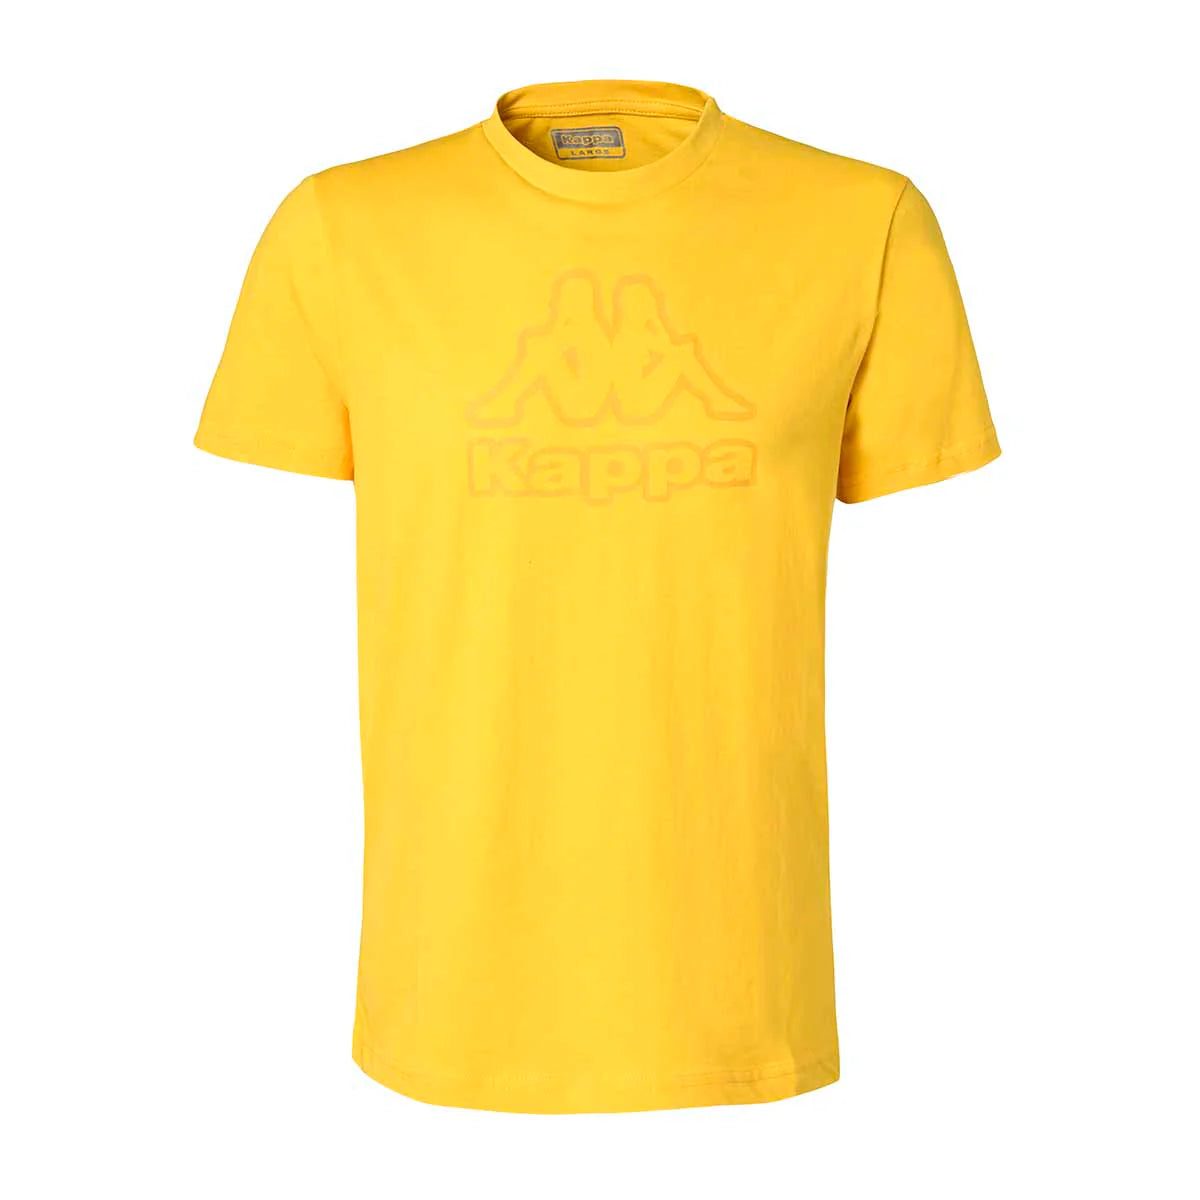 Camiseta Cremy Amarillo Hombre